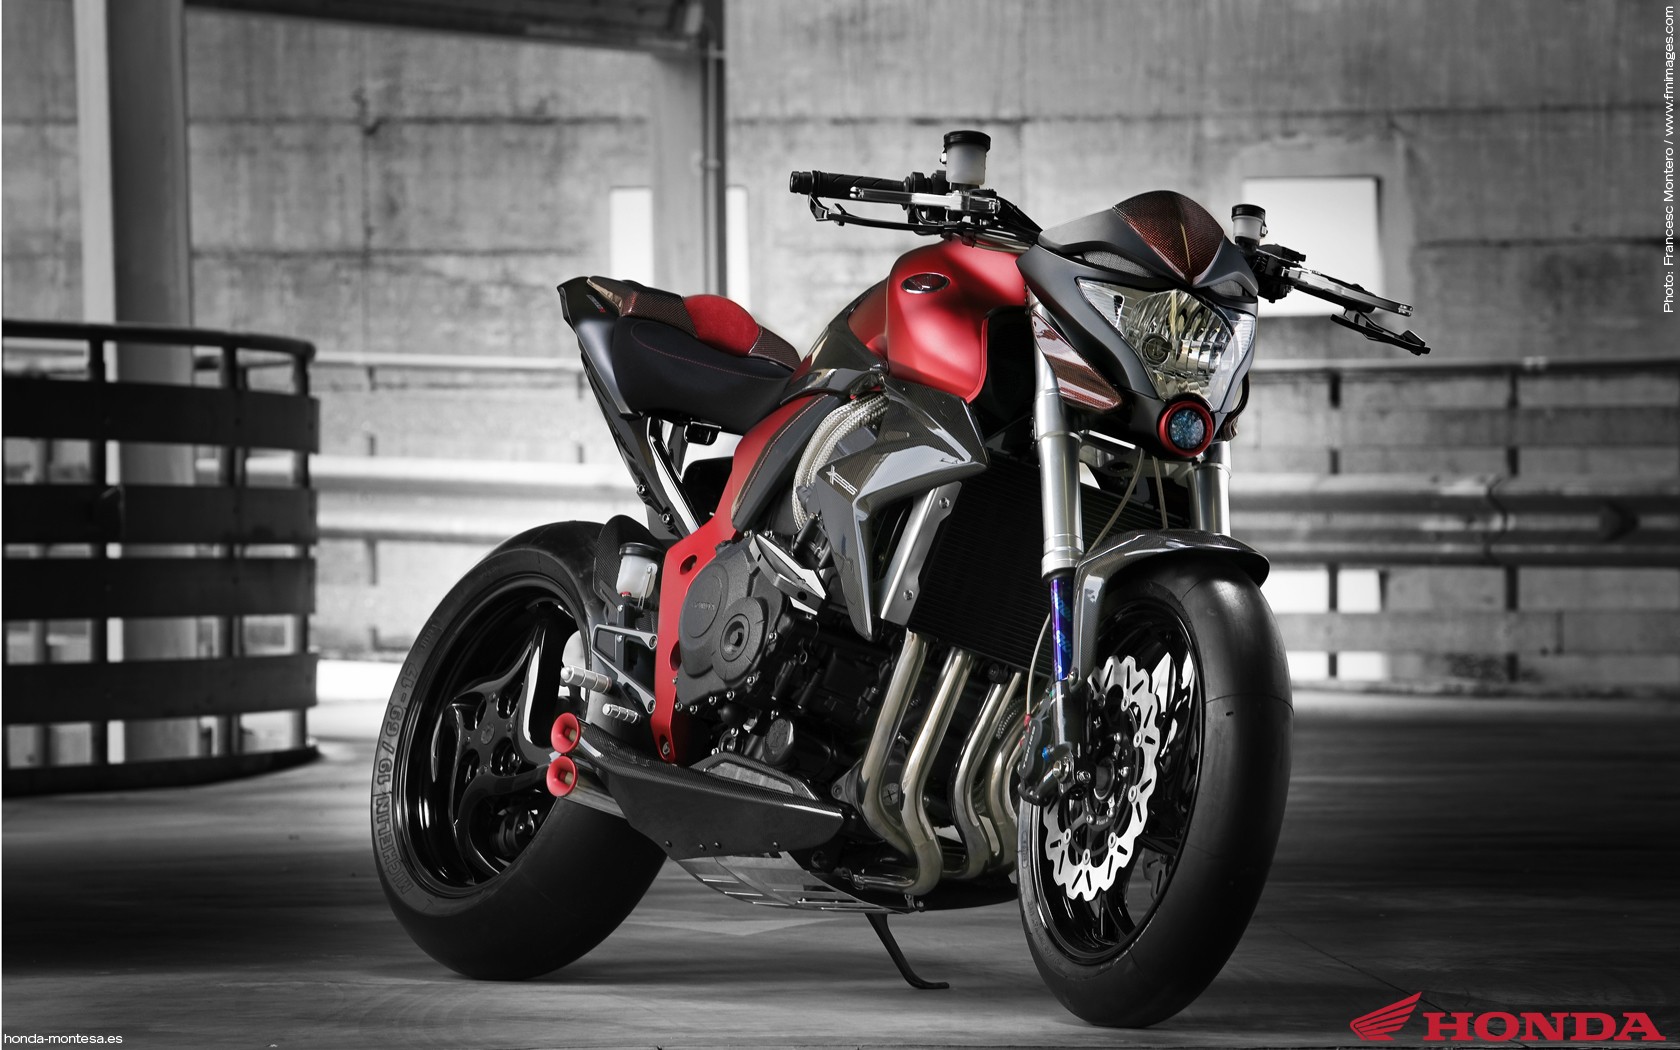 General 1680x1050 Honda motorcycle vehicle Red Motorcycles Japanese motorcycles